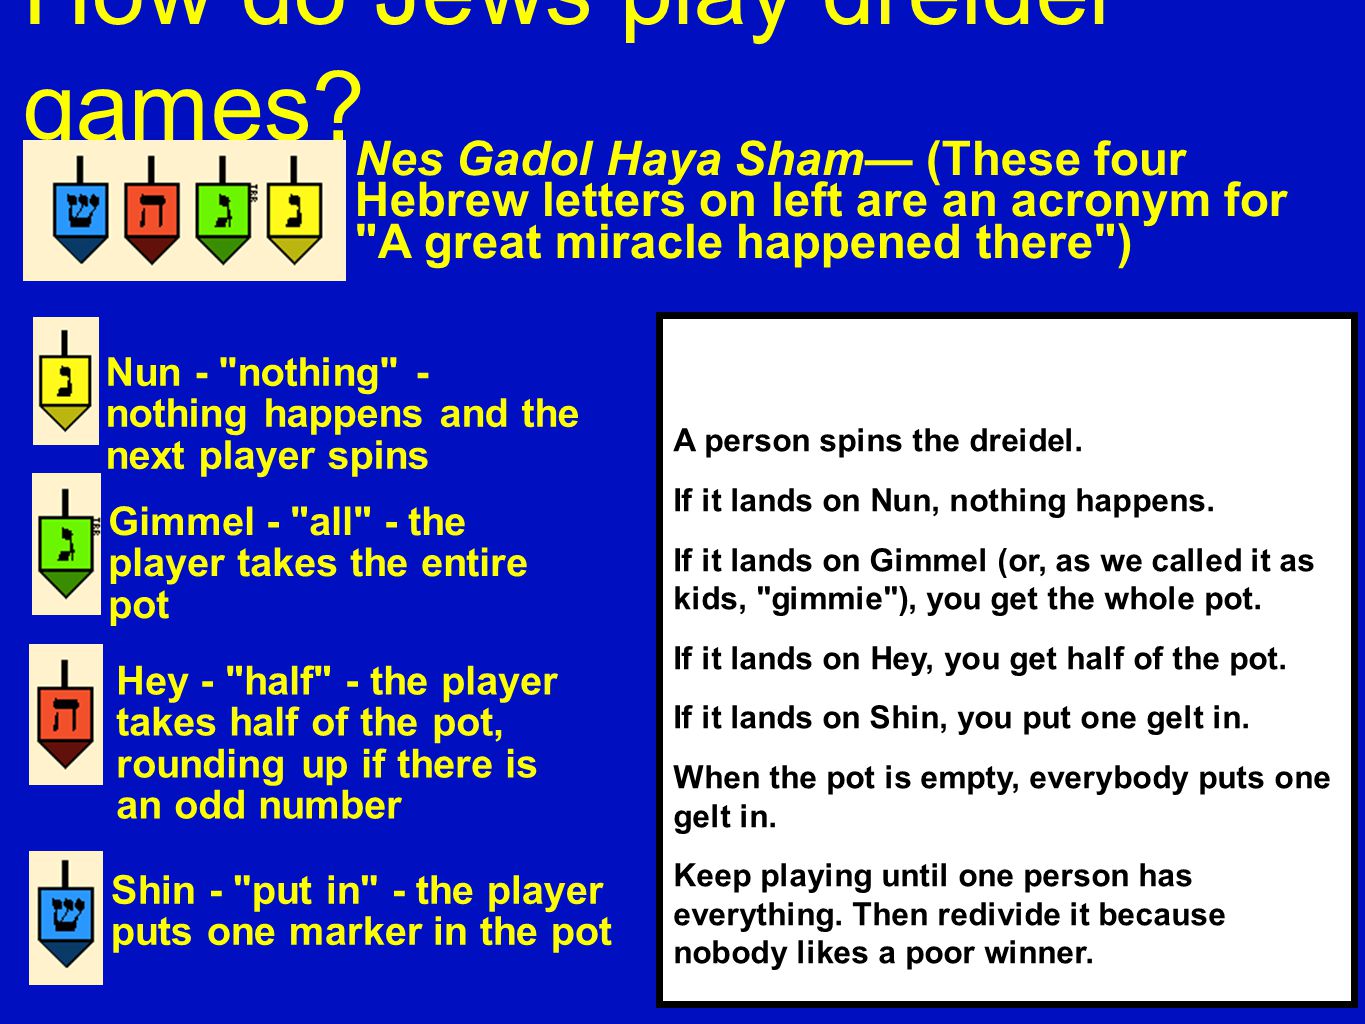 How do Jews play dreidel games